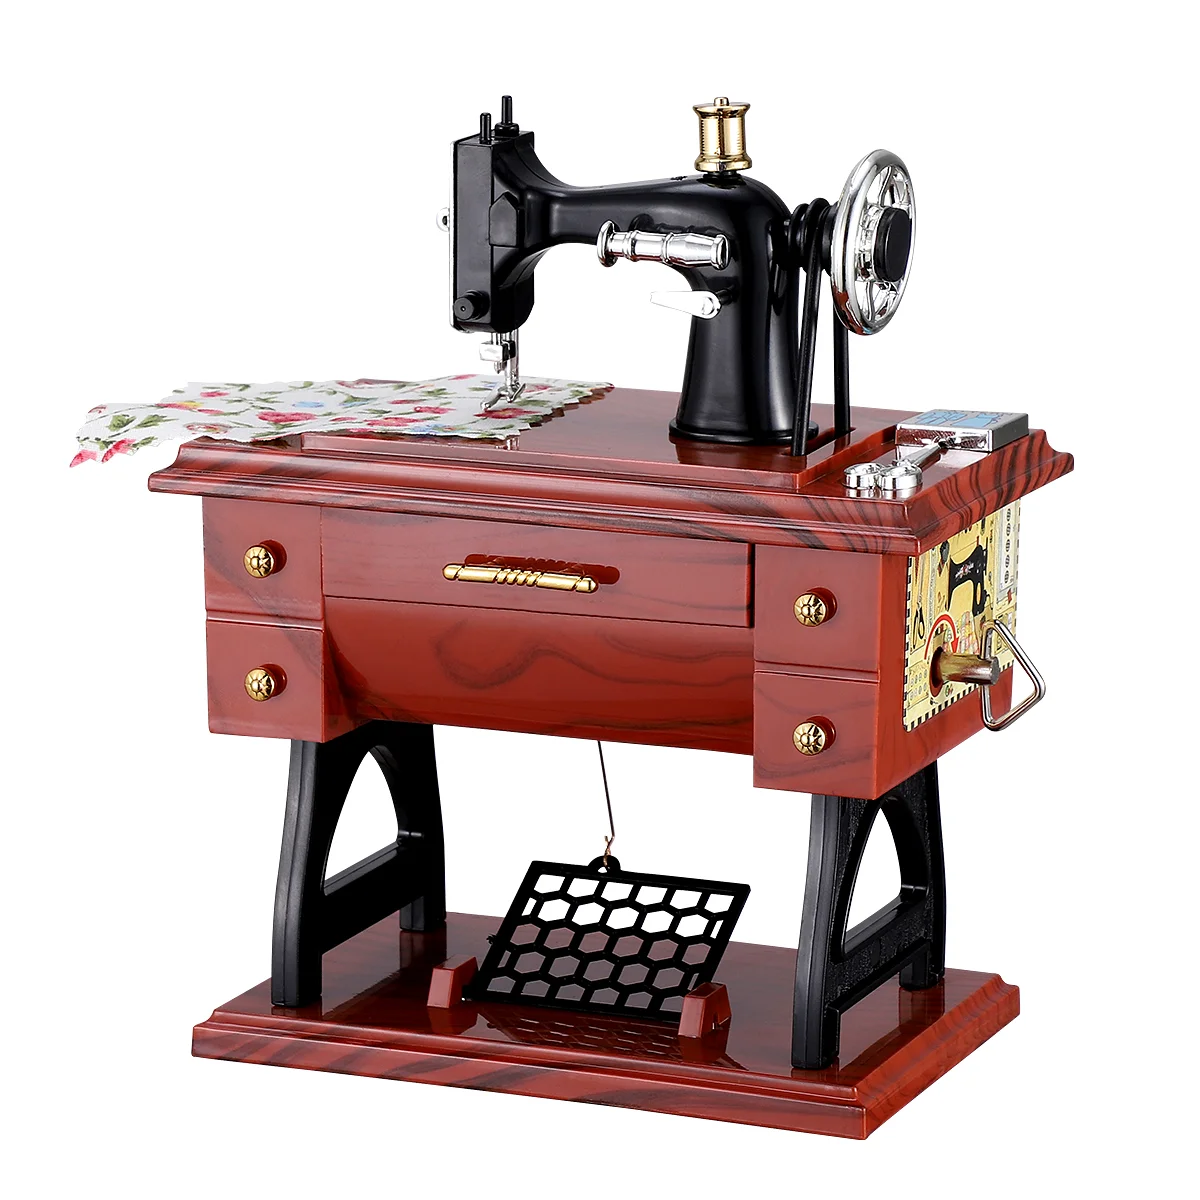 

VORCOOL Vintage Sewing Music Box Musical Toy Sewing Machine Music Sartorius Model Play Creative Gift Music Box Machine